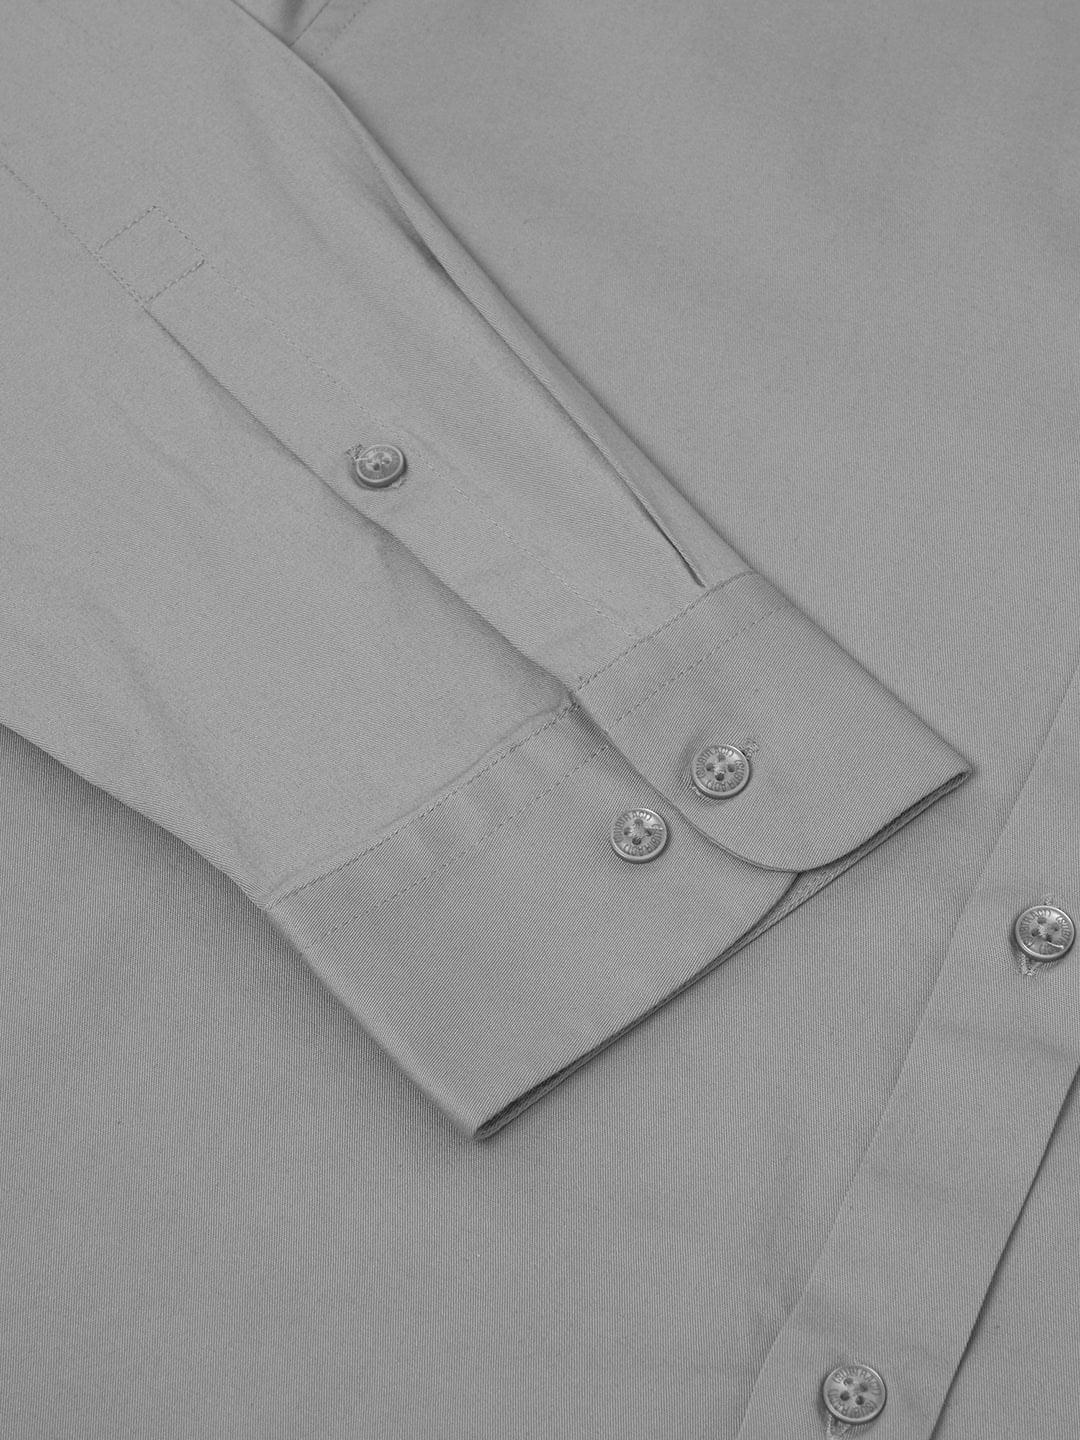 2 Way Stretch Cotton Shirt in Ash Grey- Slim Fit